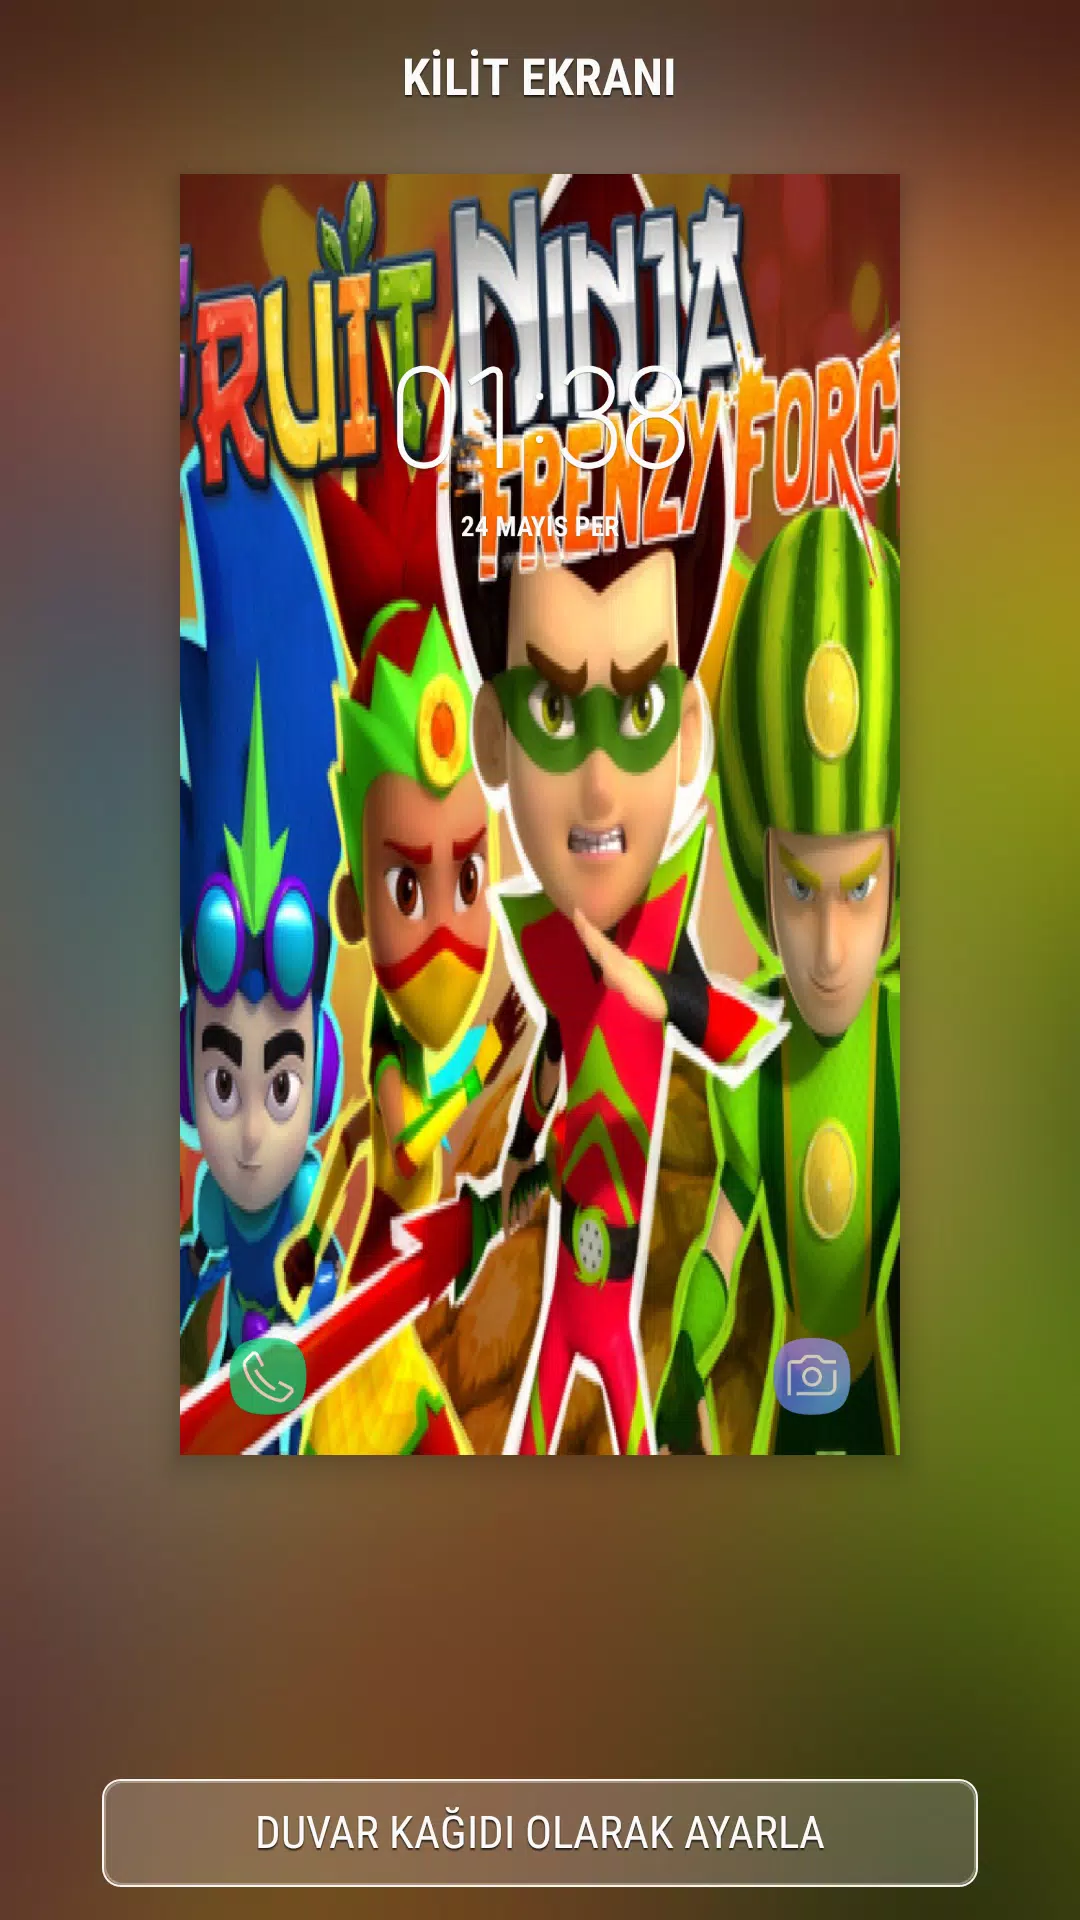 Fruit Ninja: Frenzy Force (2018)